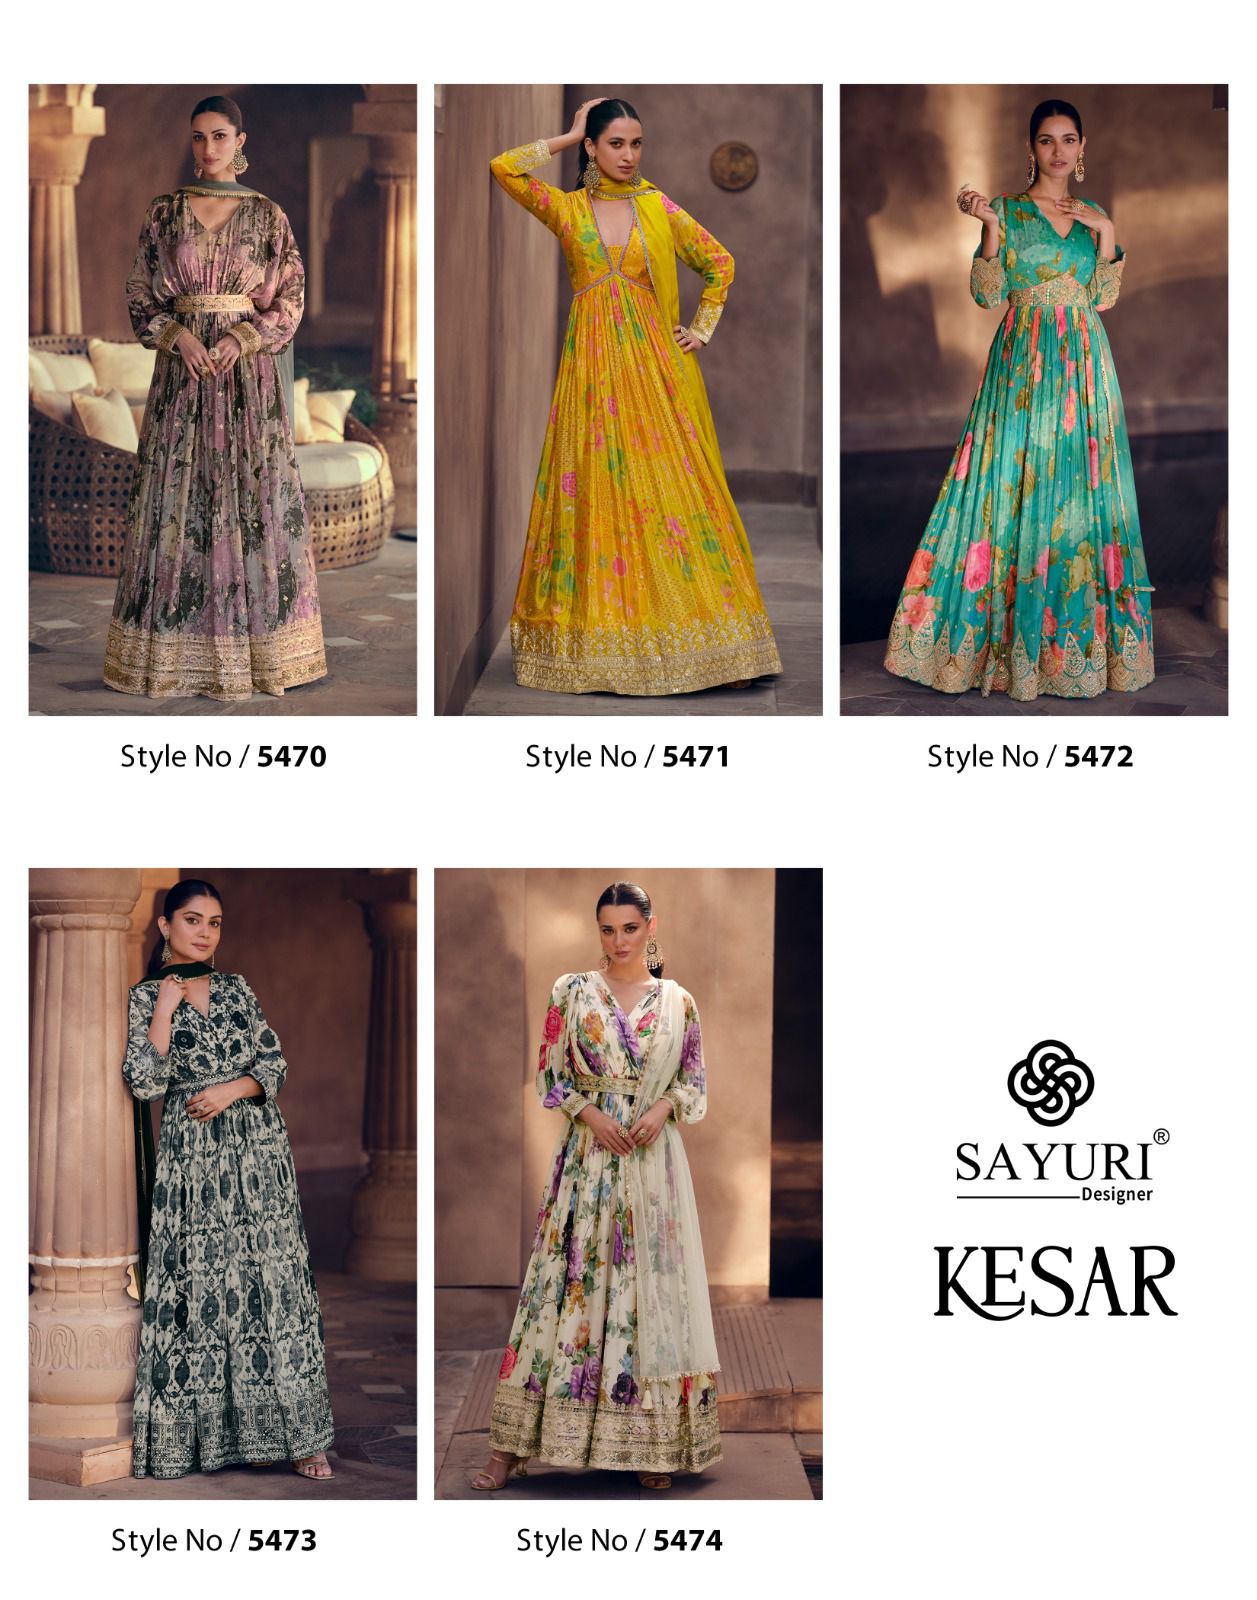 Sayuri Kesar collection 1